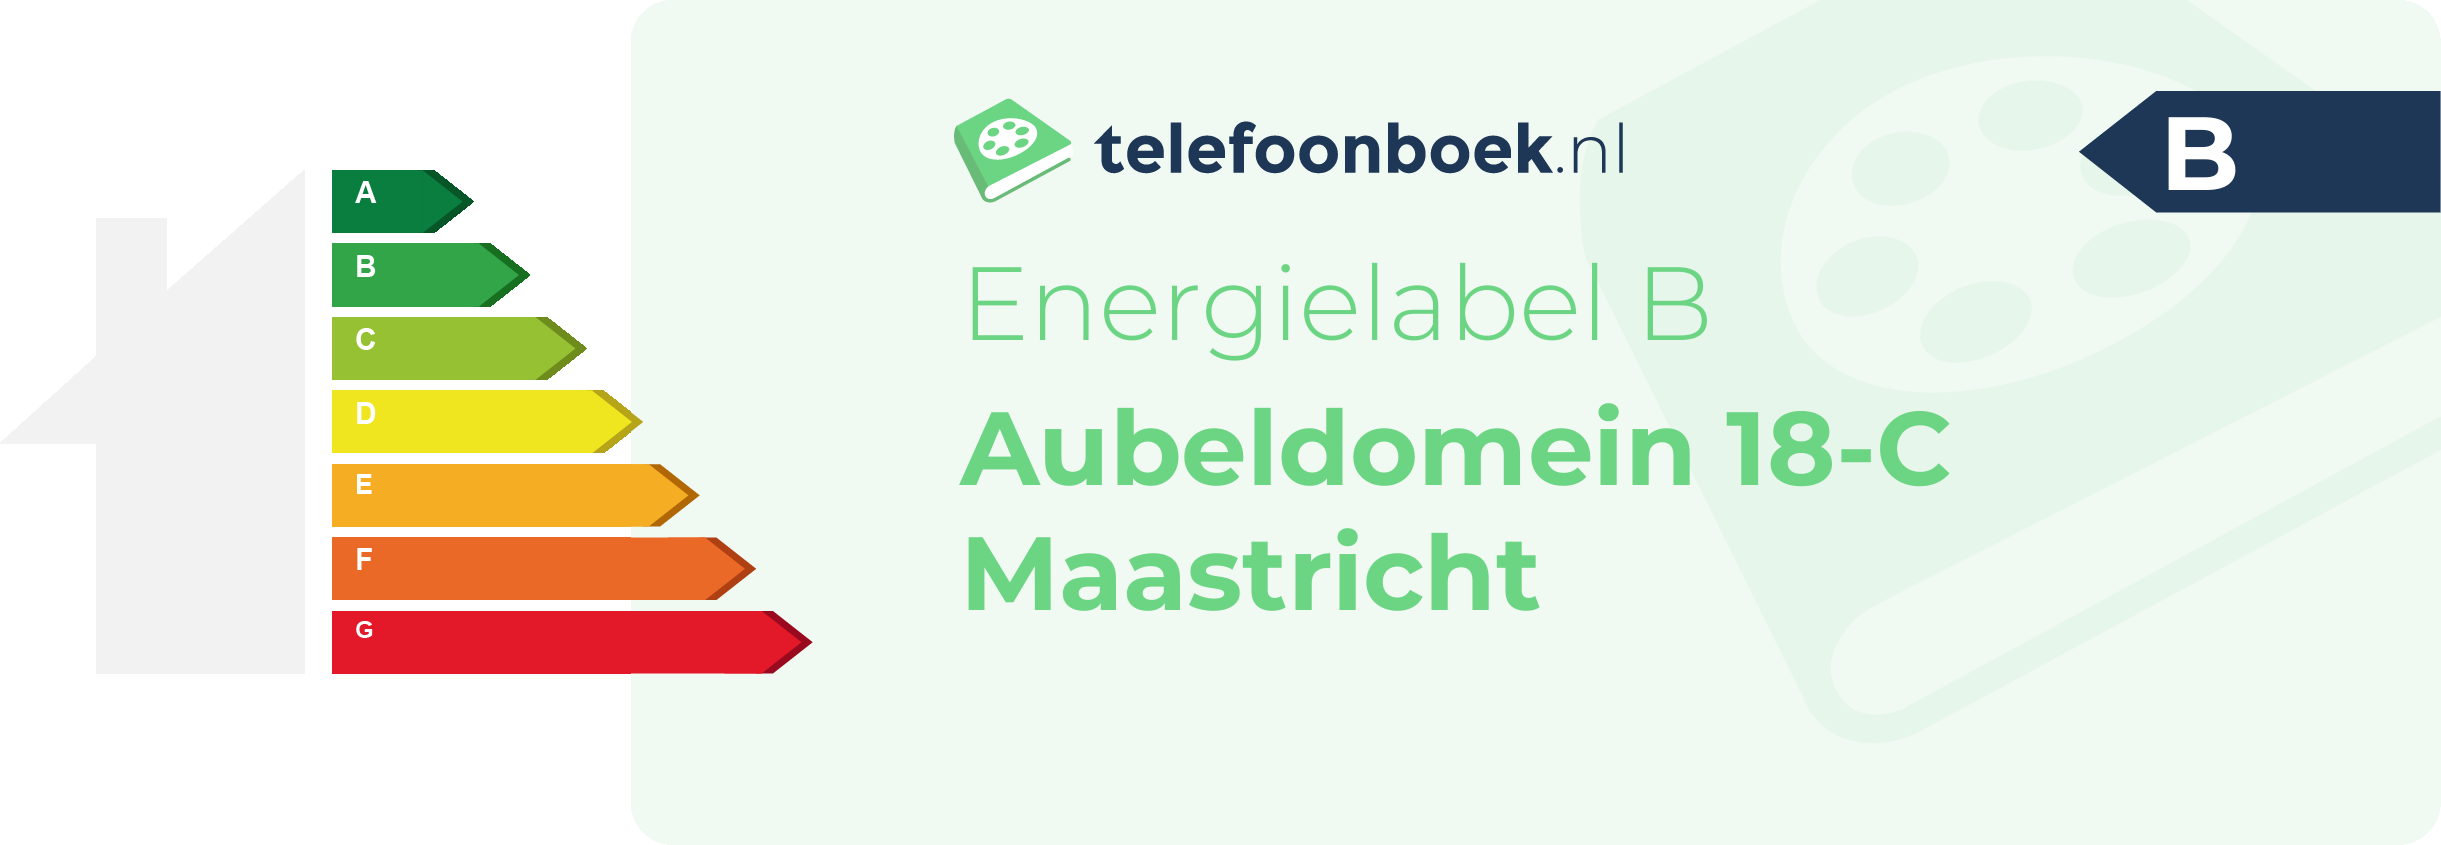 Energielabel Aubeldomein 18-C Maastricht